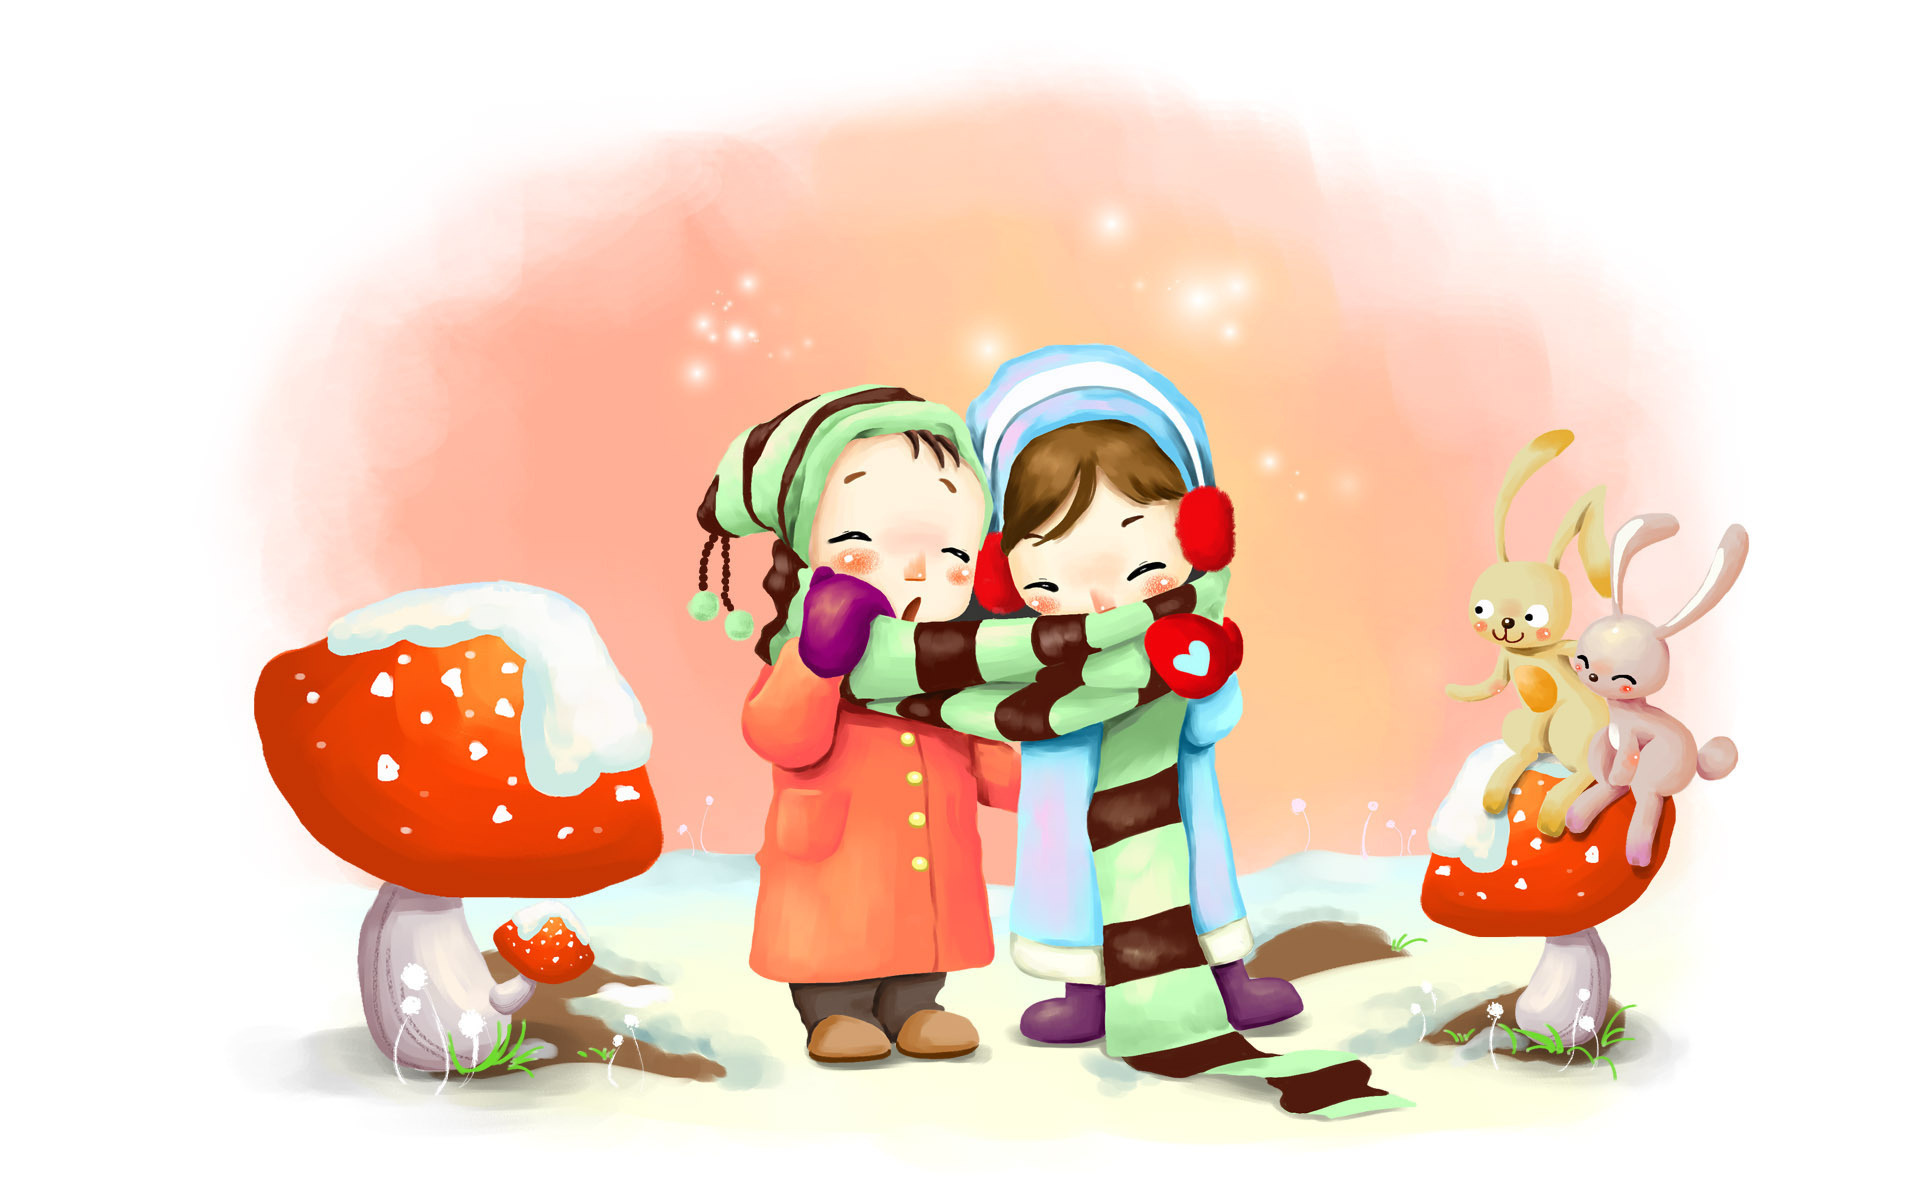 artistic, child, cold, mushroom, scarf, winter